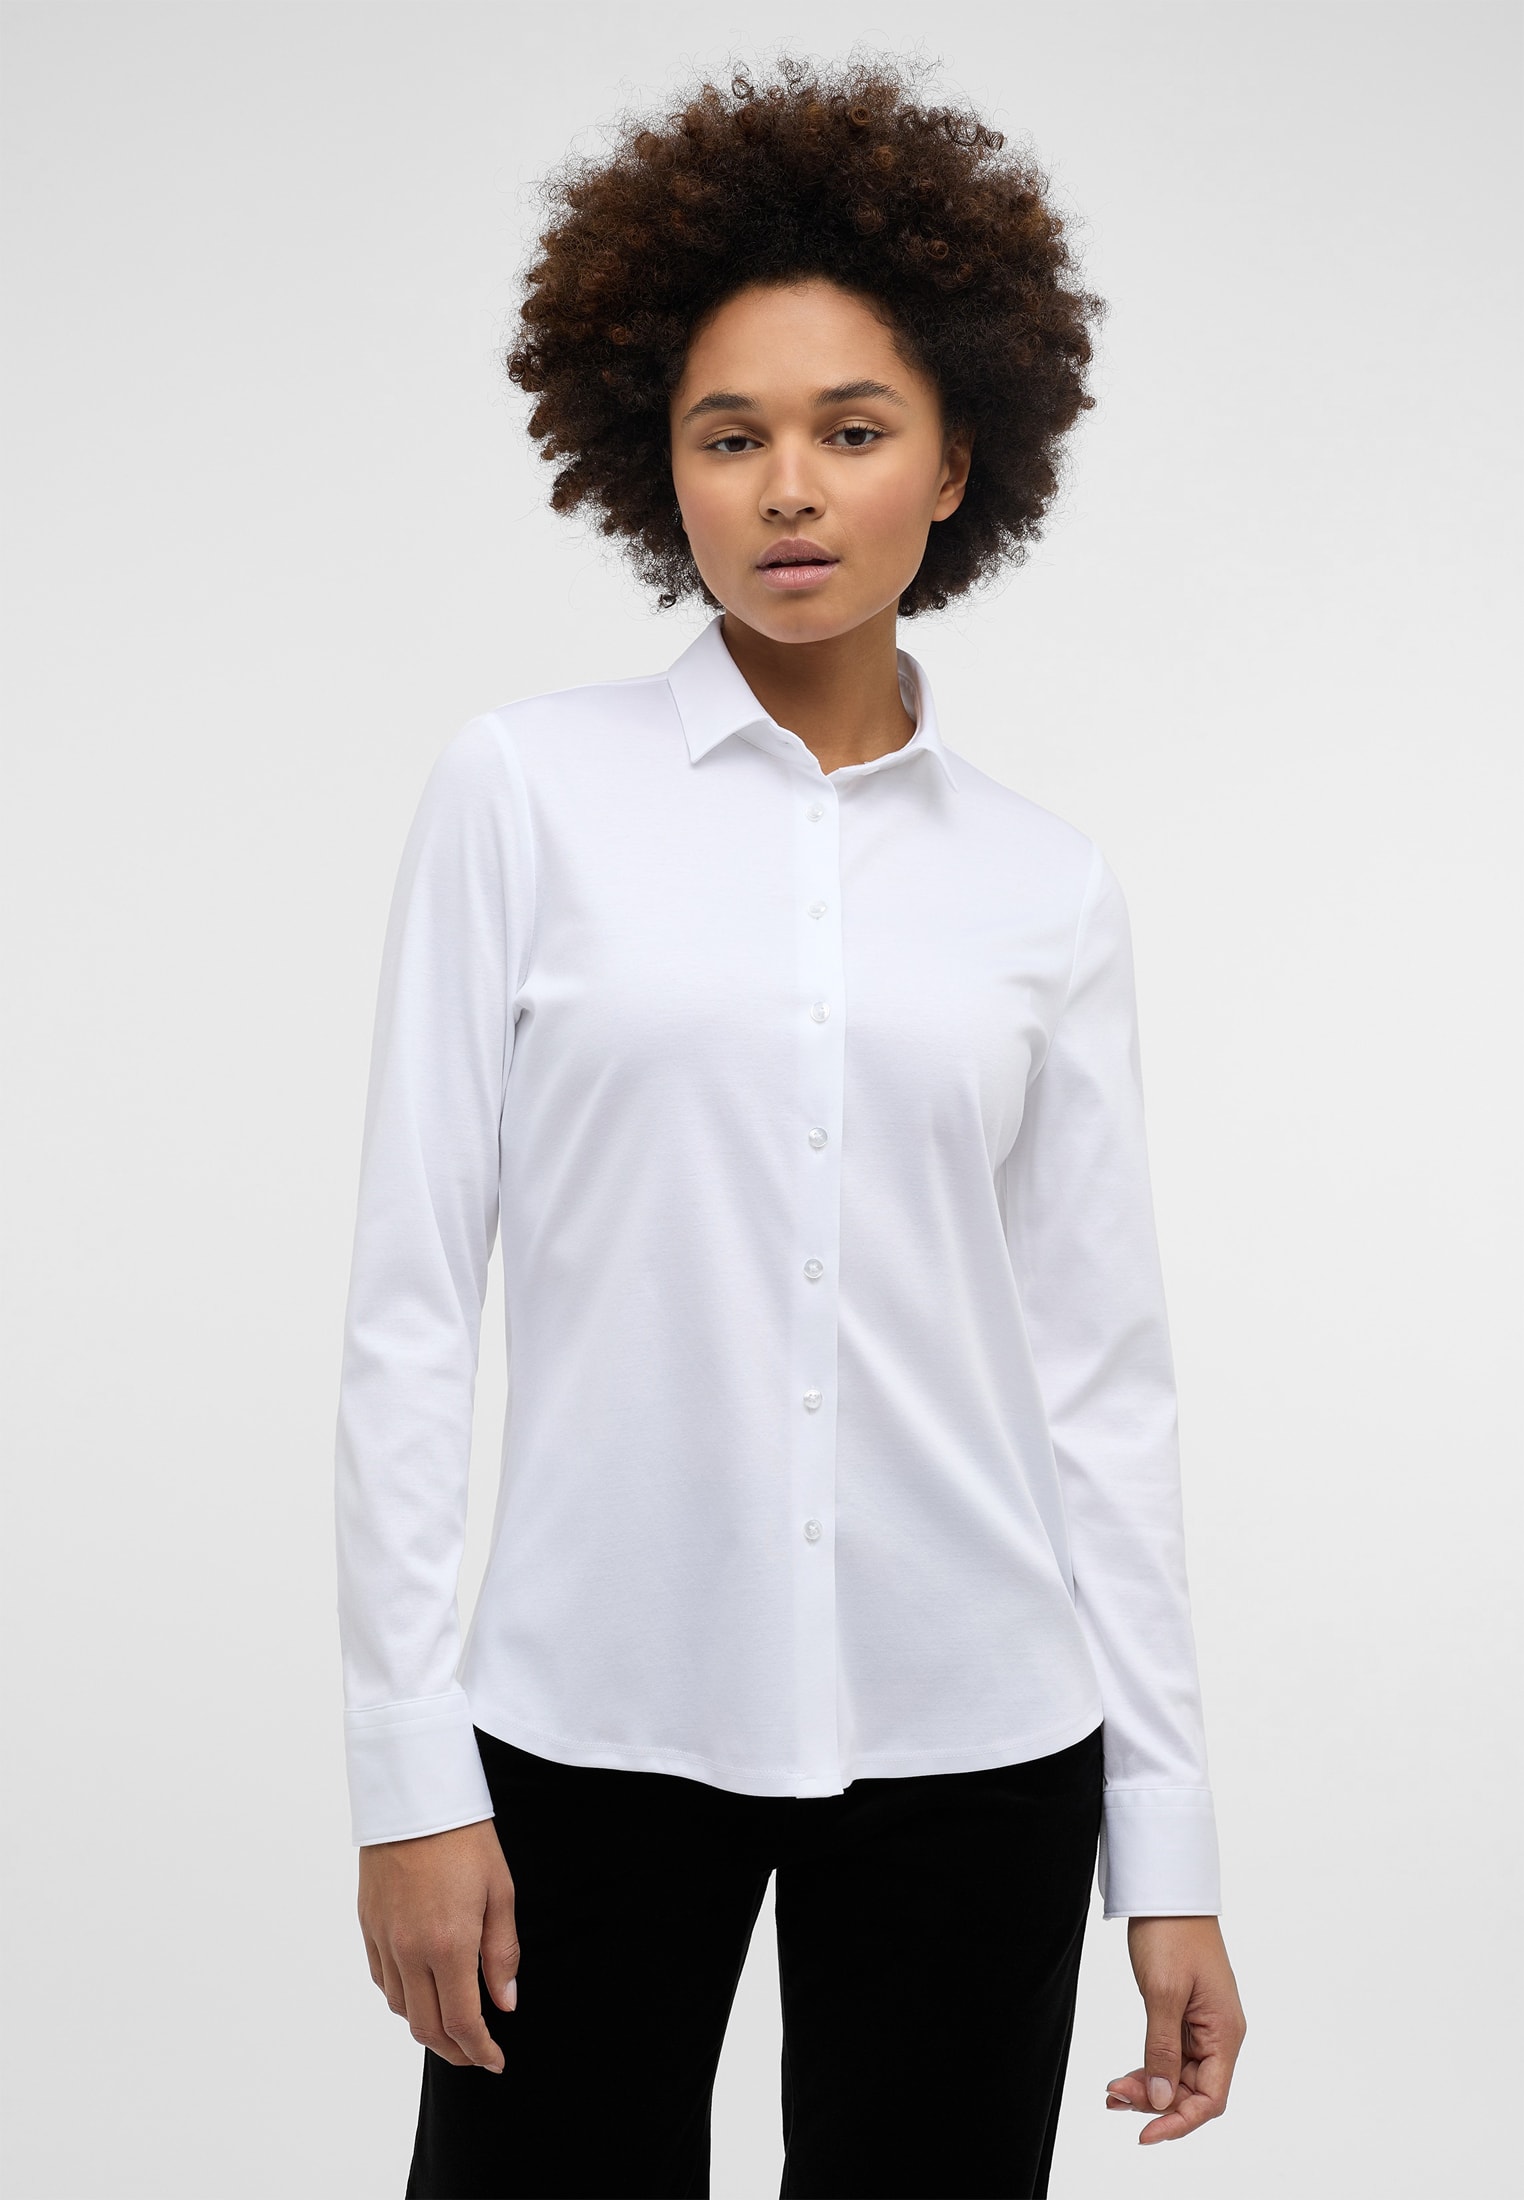 Jersey Shirt Blouse in white | 2BL00229-00-01-42-1/1 white plain long 42 | | | sleeve